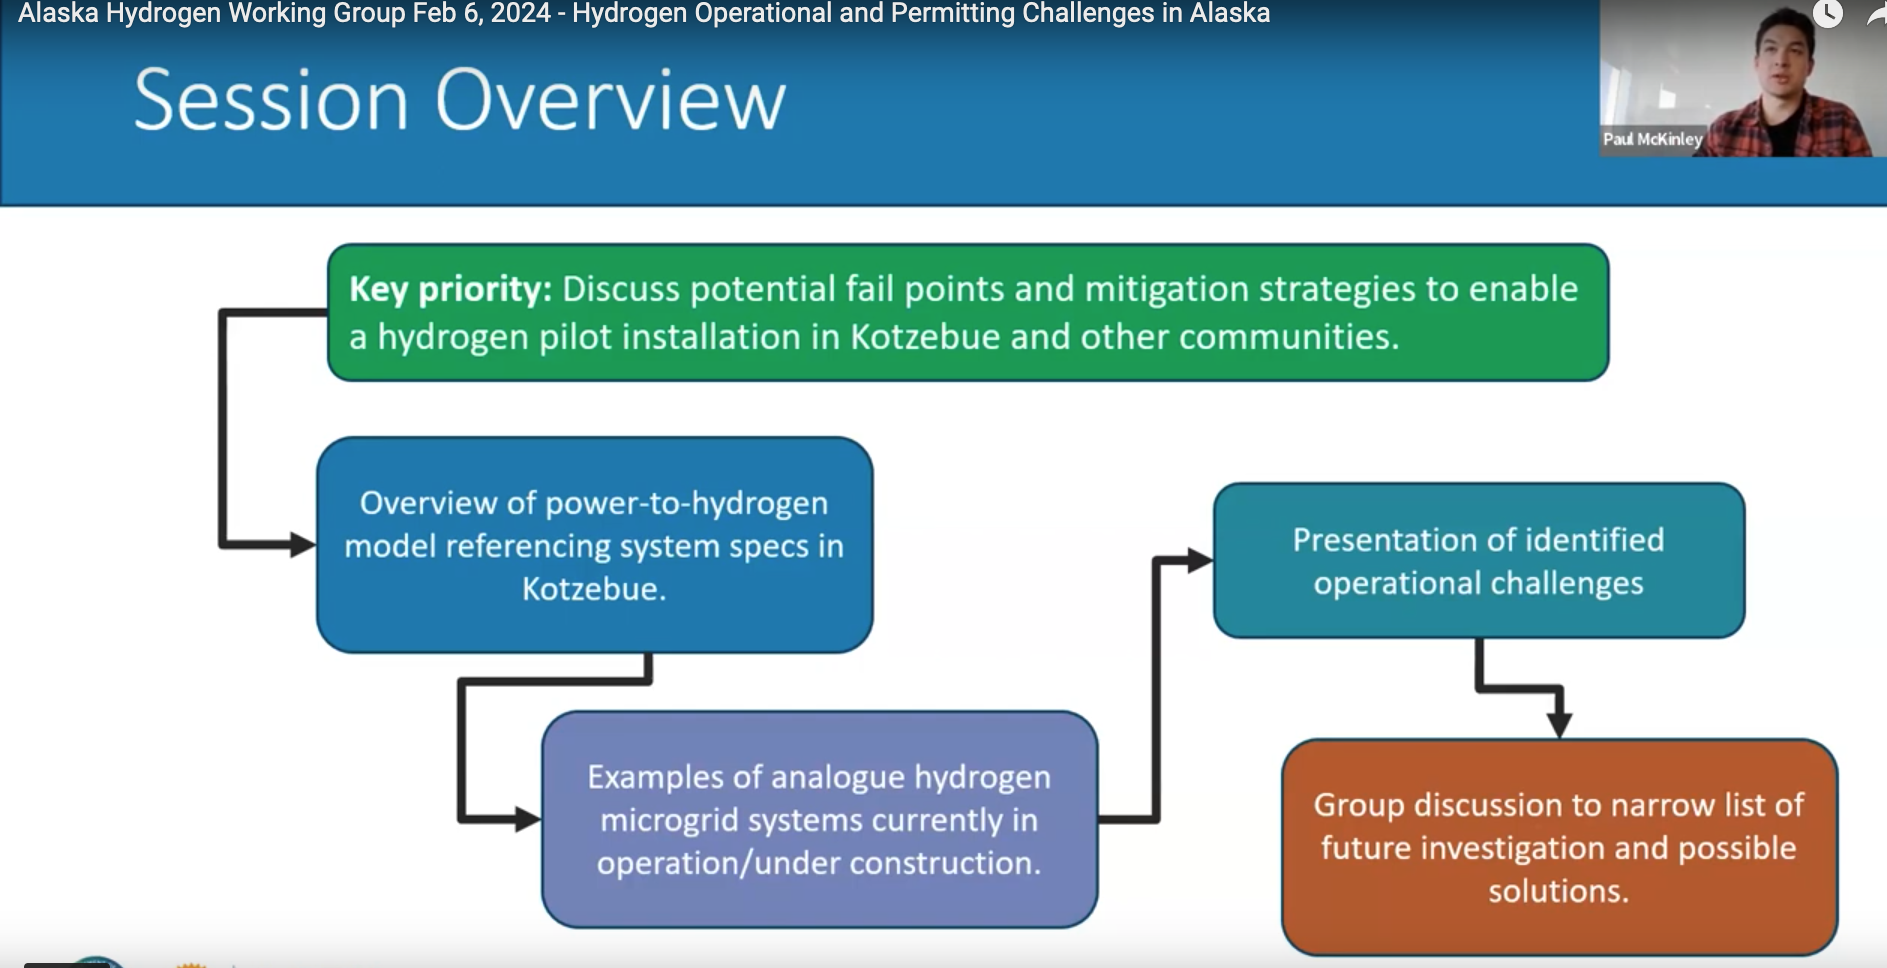 A screenshot of the Alaska HWG February presentation